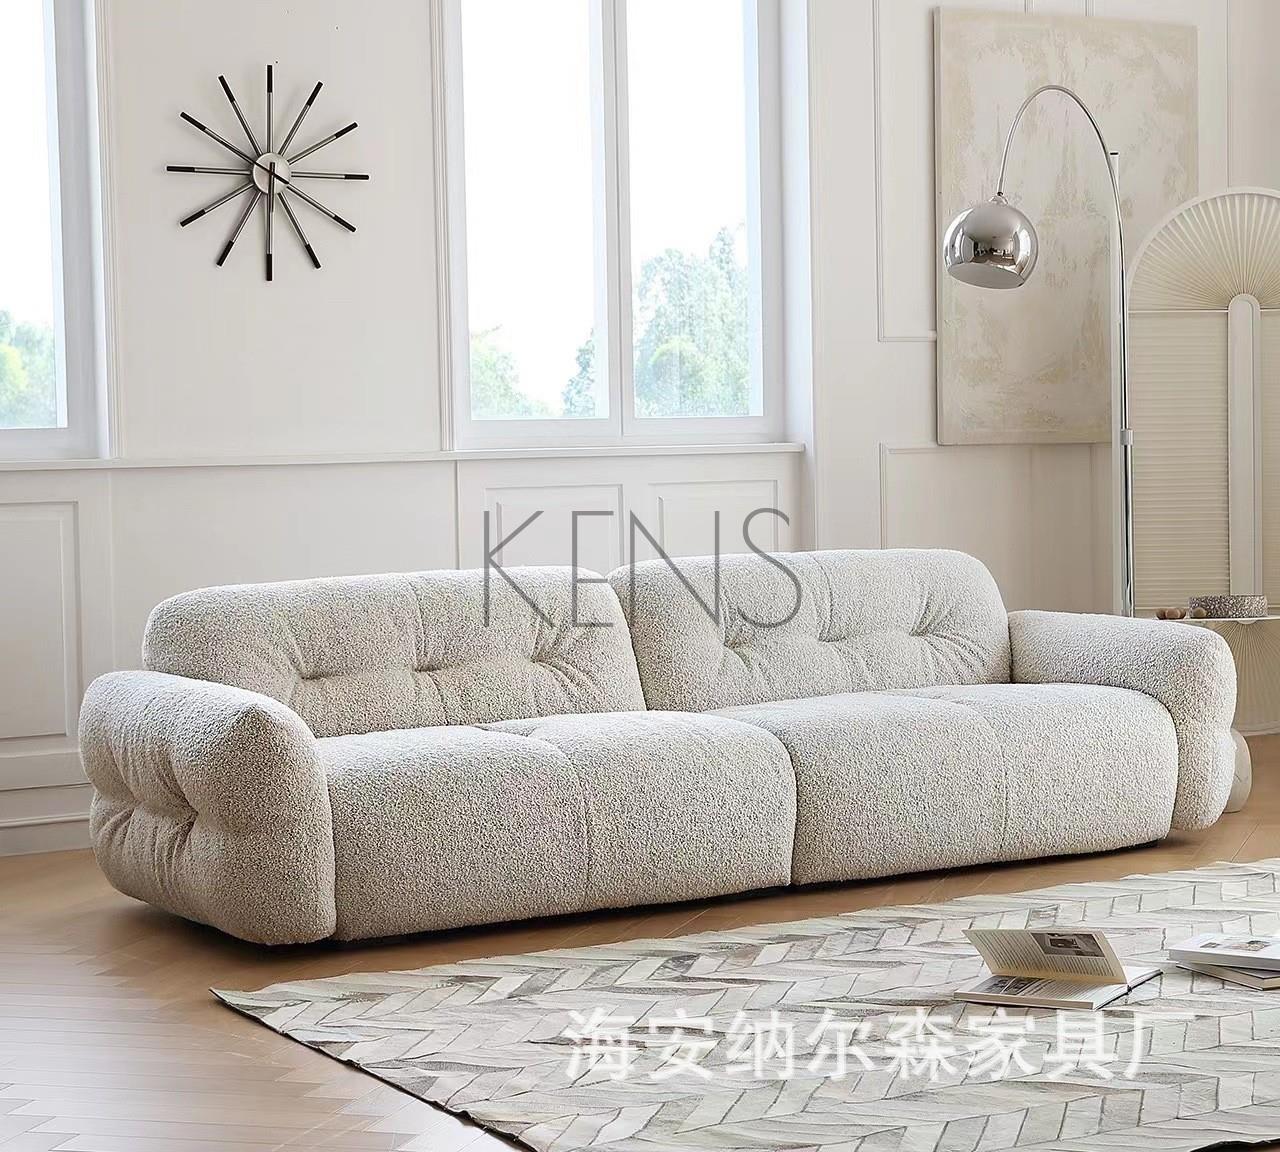 【KENS】沙發 沙發椅 法式云團沙發復古奶油風現代簡約小戶型網紅雪花絨布藝沙發